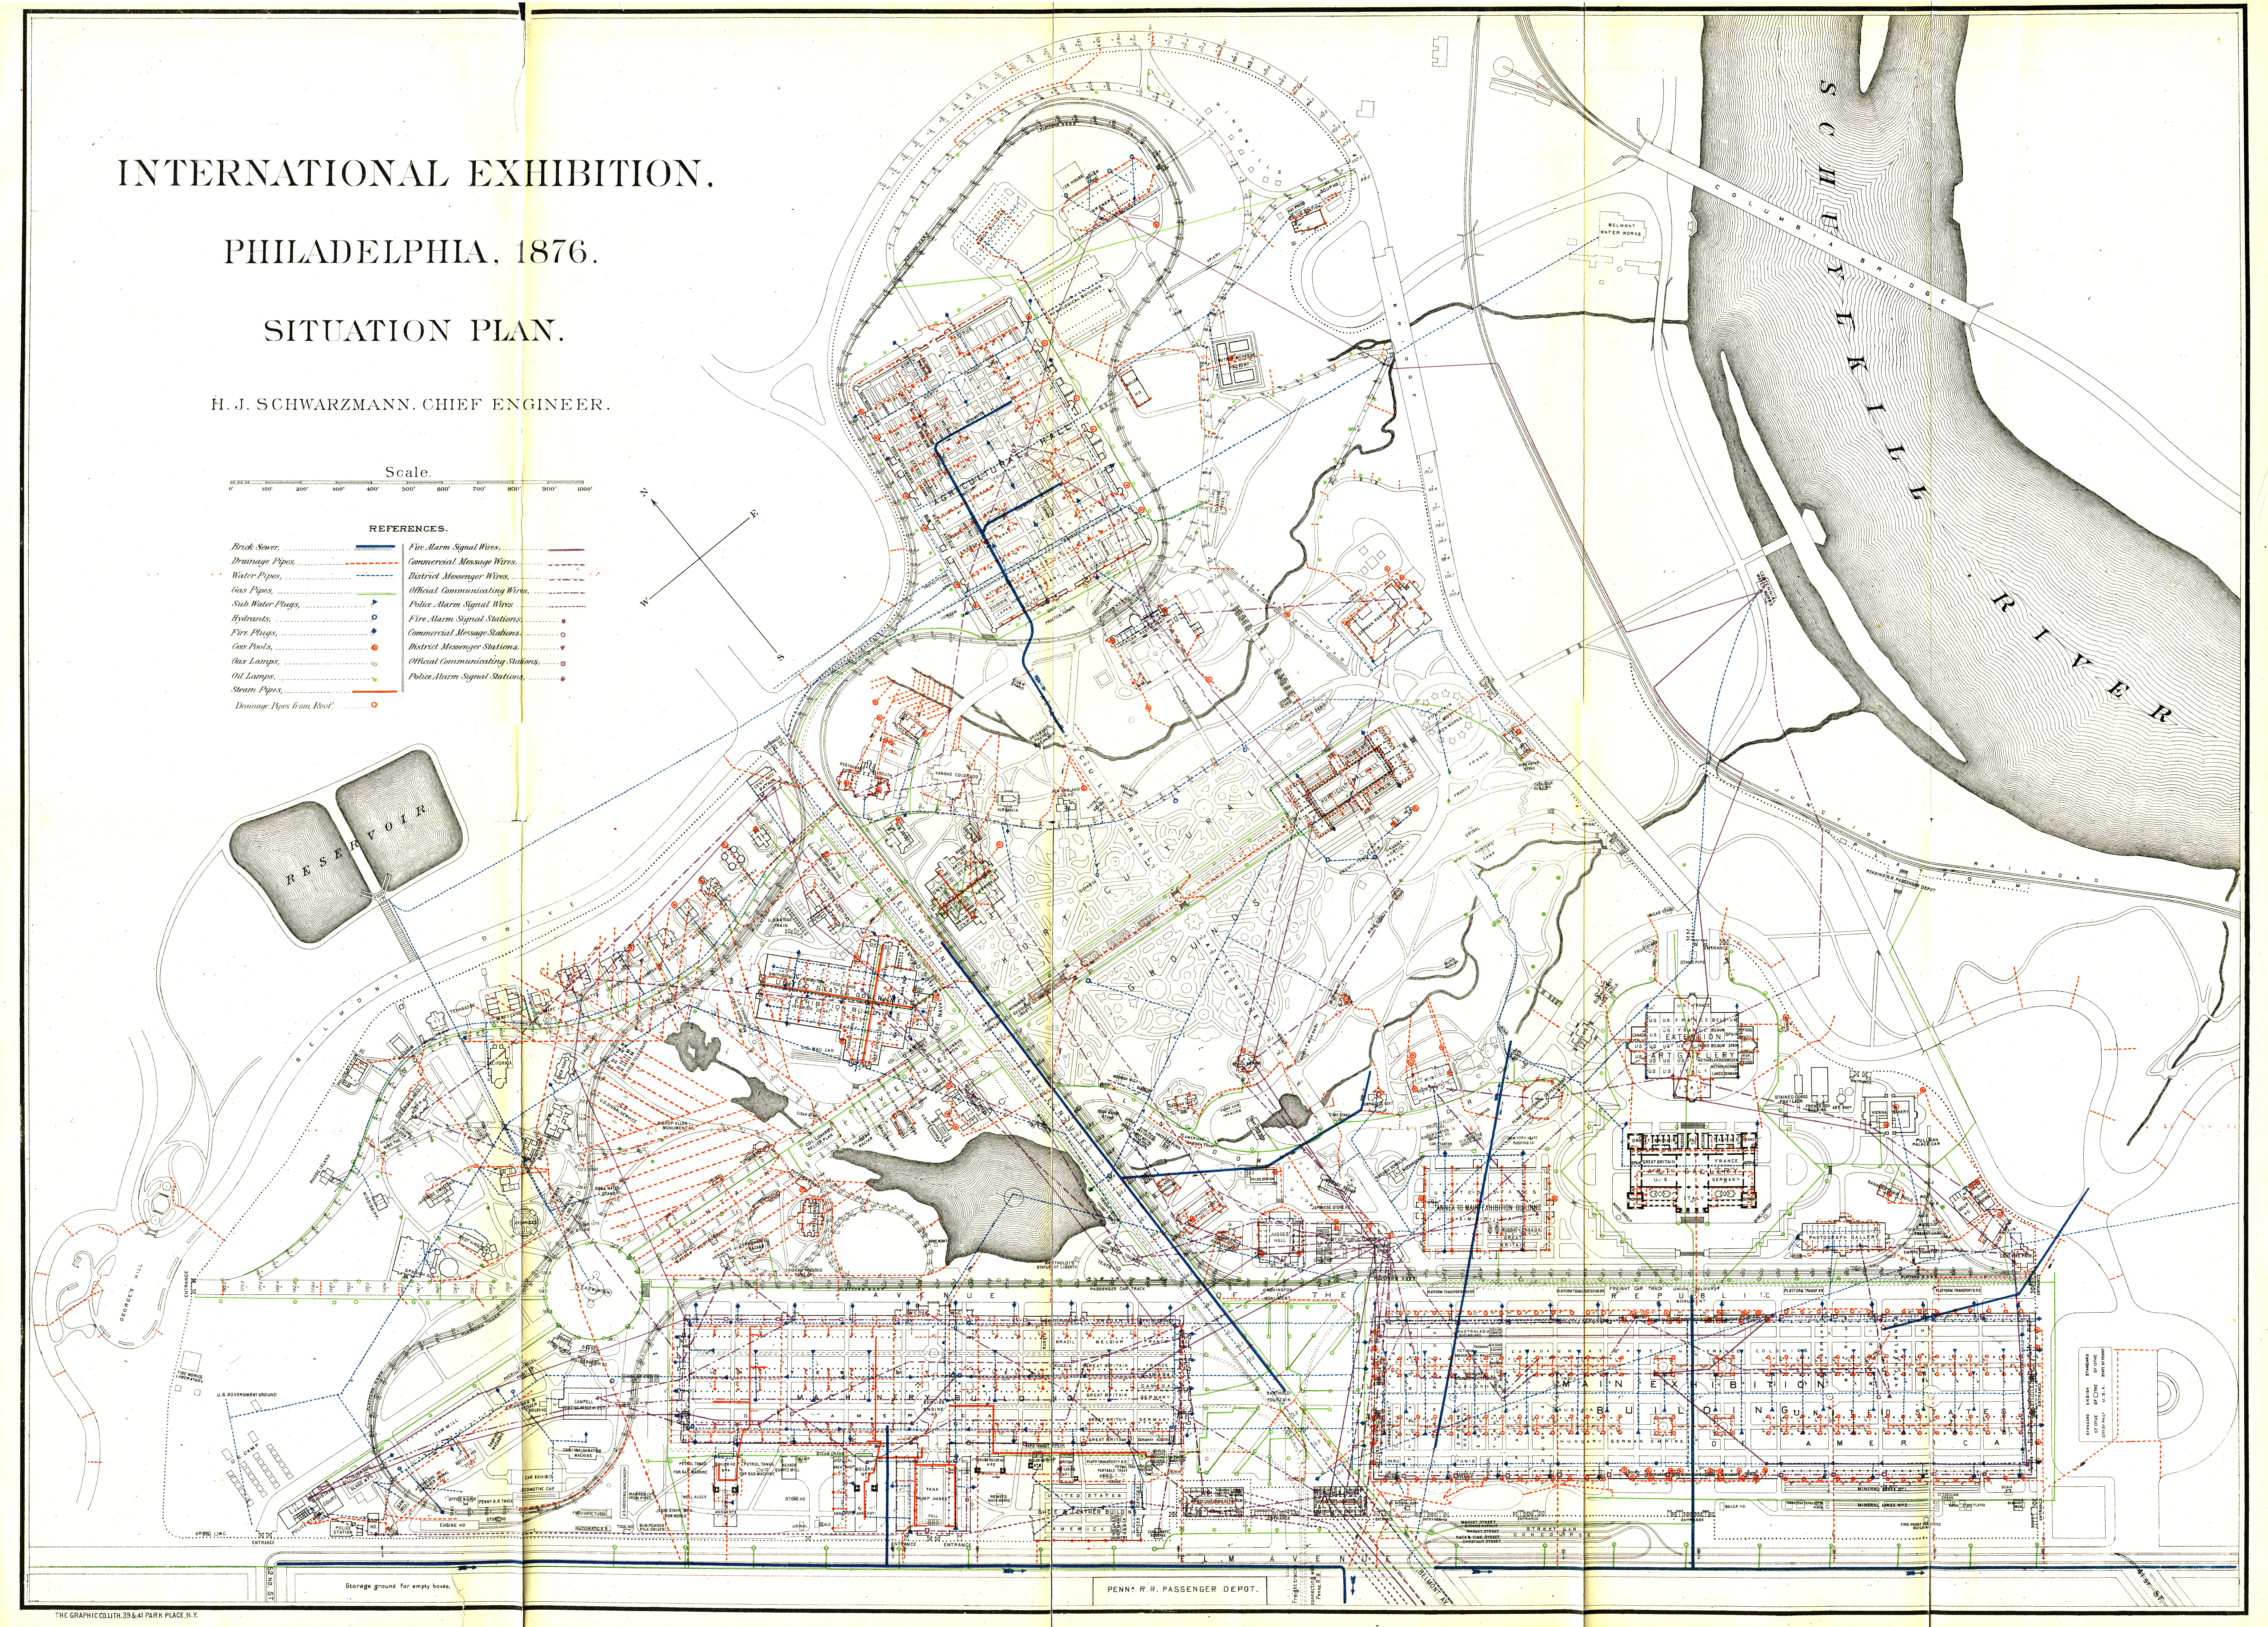 International Exhibition situation plan, 1876